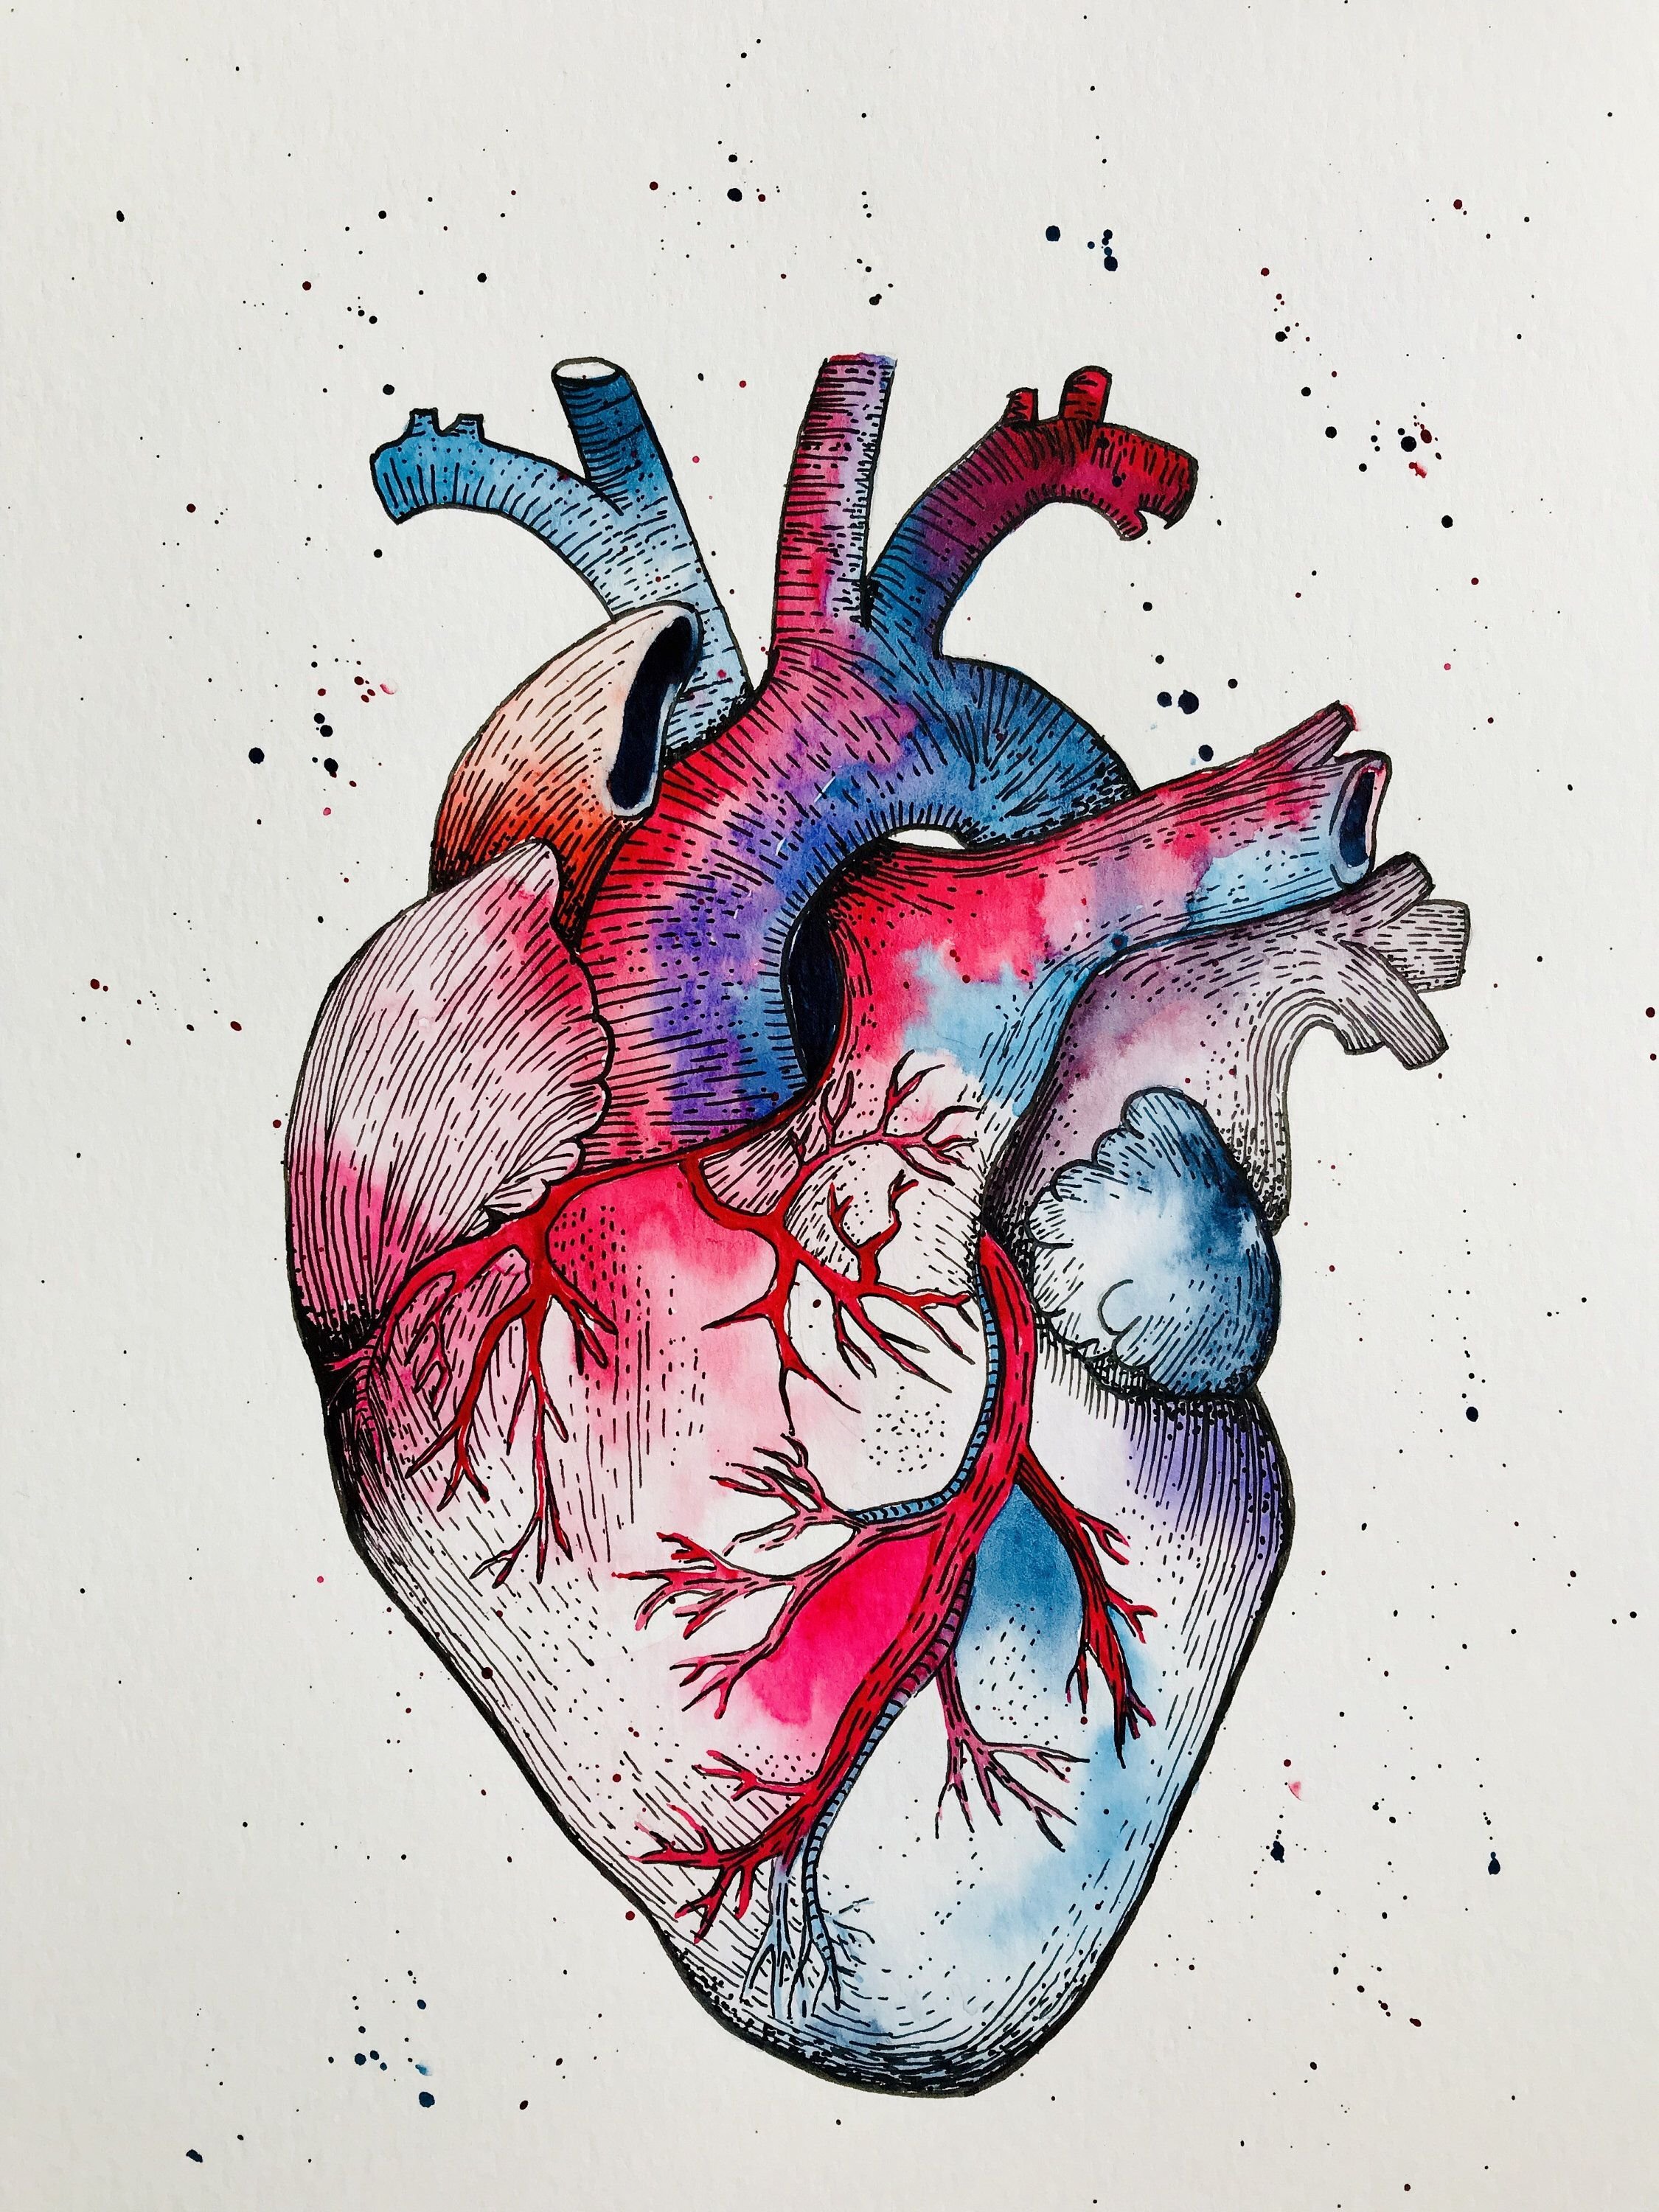 Орган сердце человека рисунок. Сердце рисунок. Человеческое сердце арт.